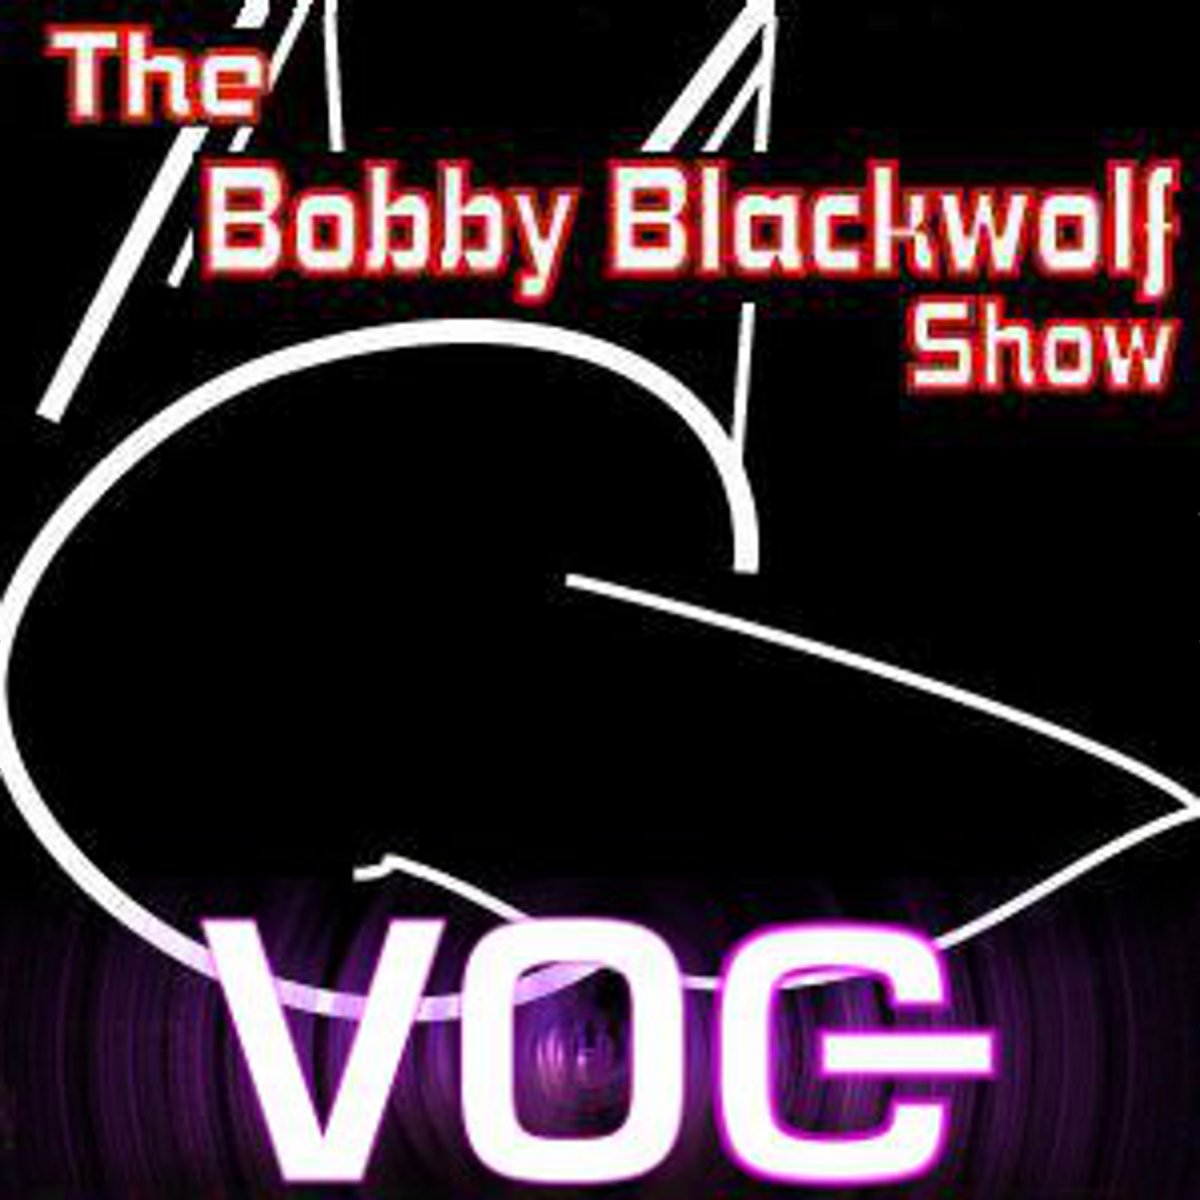 The Bobby Blackwolf Show Bobbyblackwolf Com